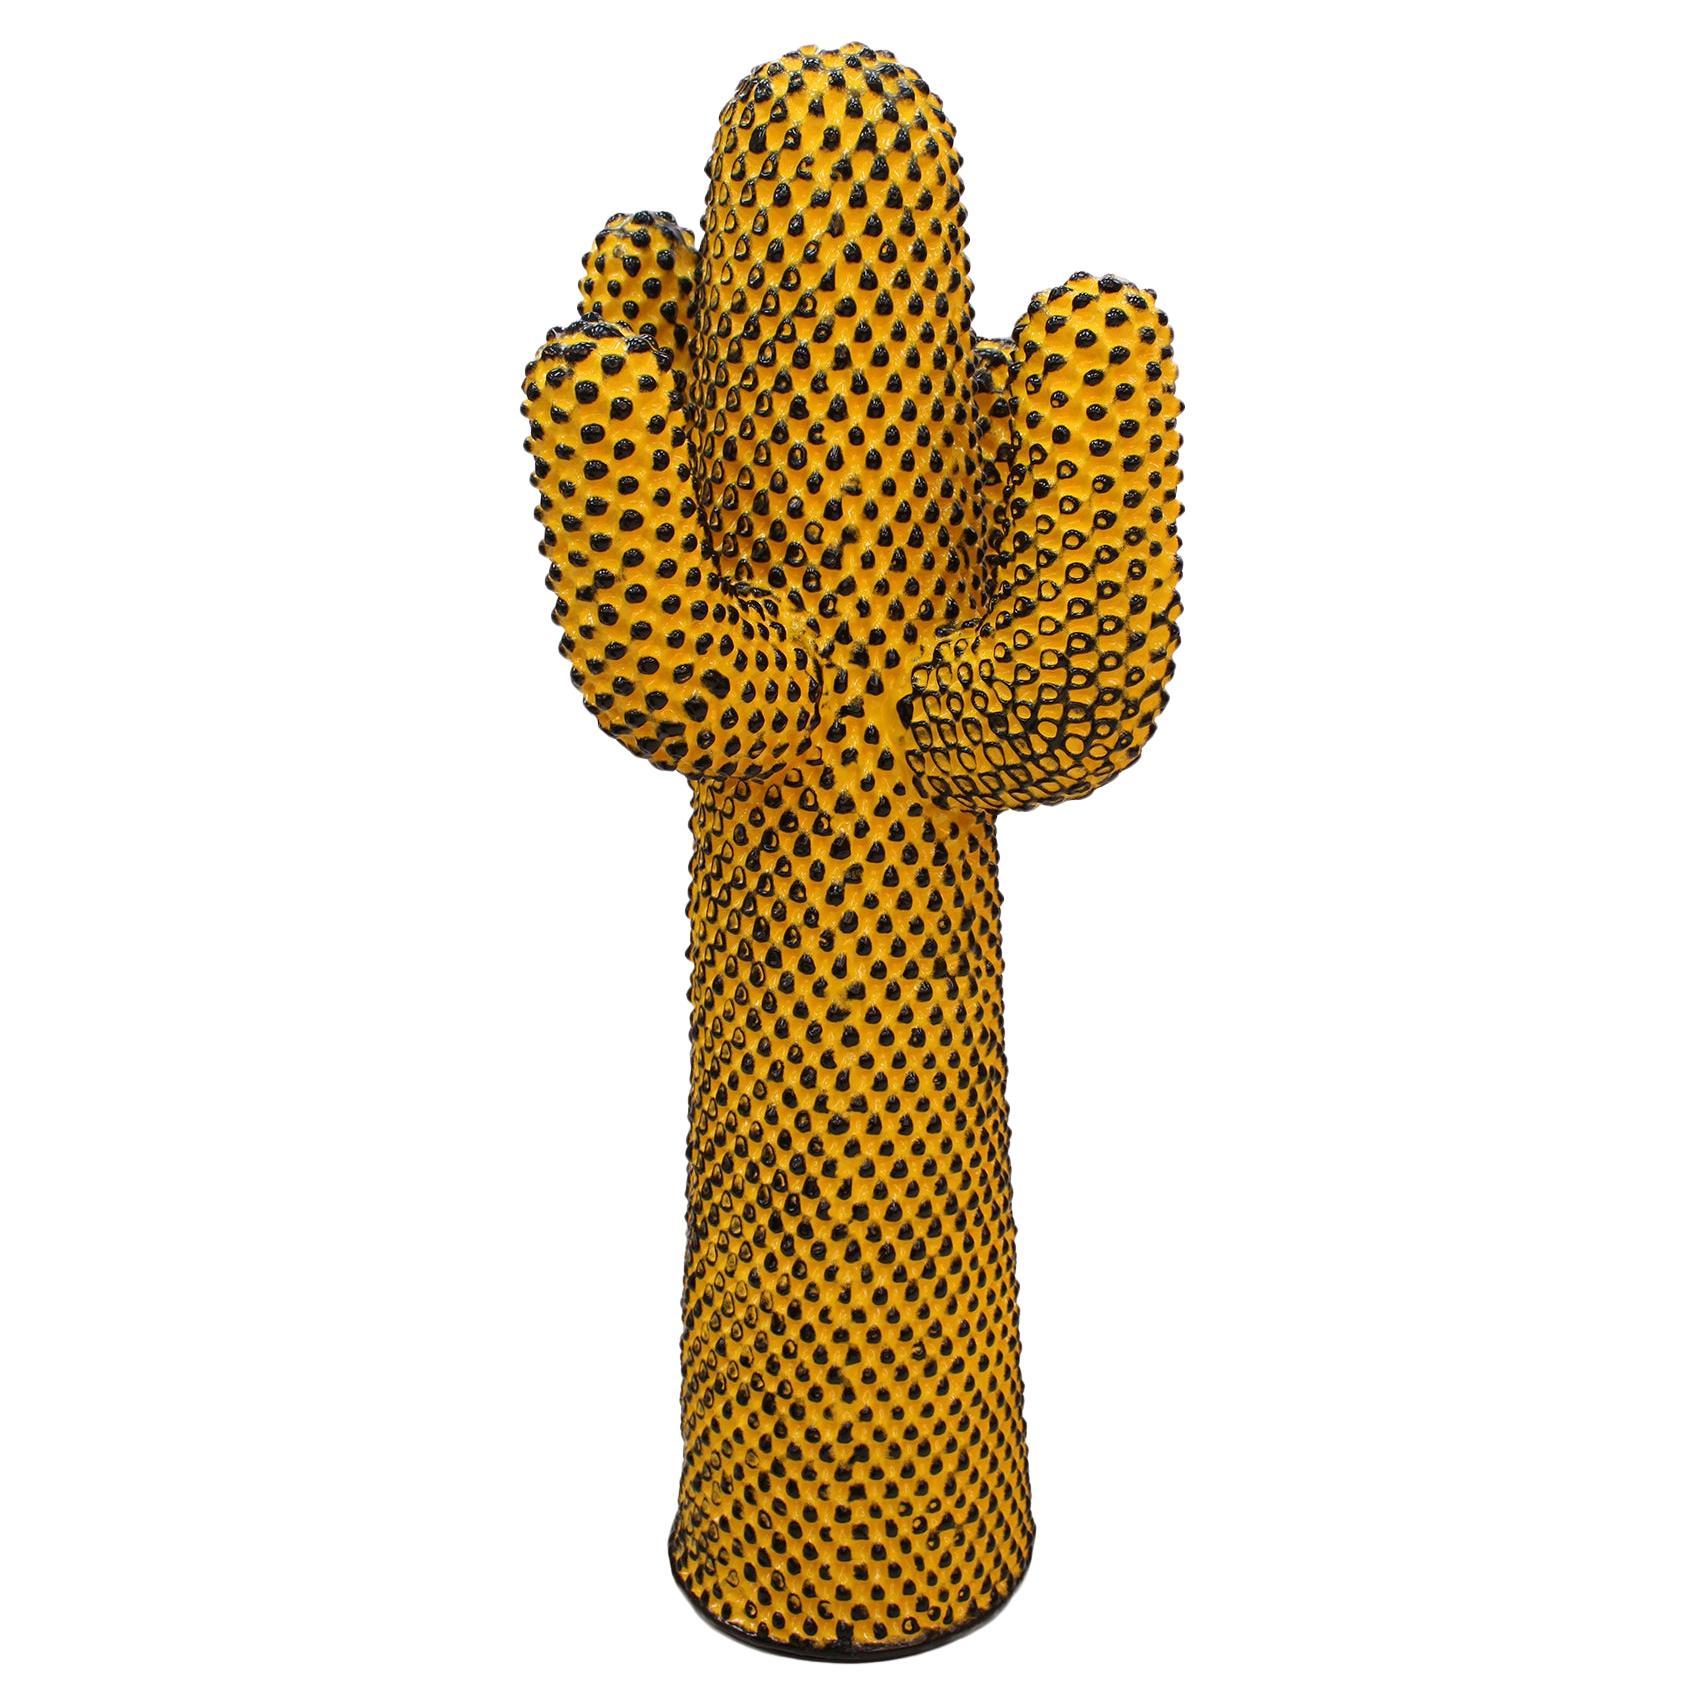 Cactus Coat Rack Designed by Guido Rocco & Franco Mello, Edited by Gunfram